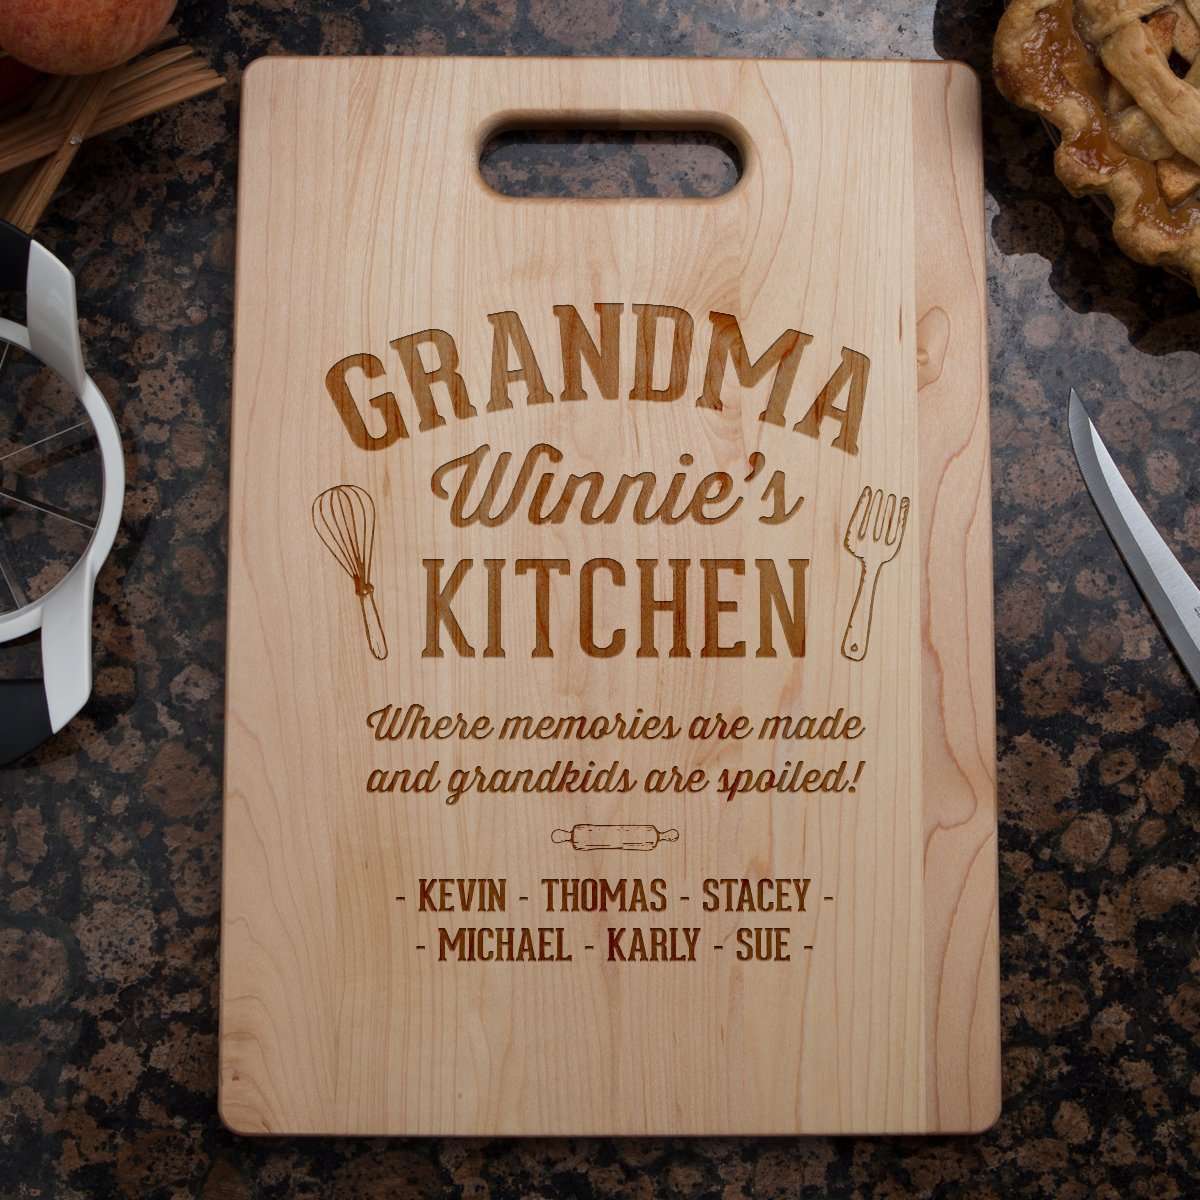 Grandma's Kitchen Cutting Board - Personalized